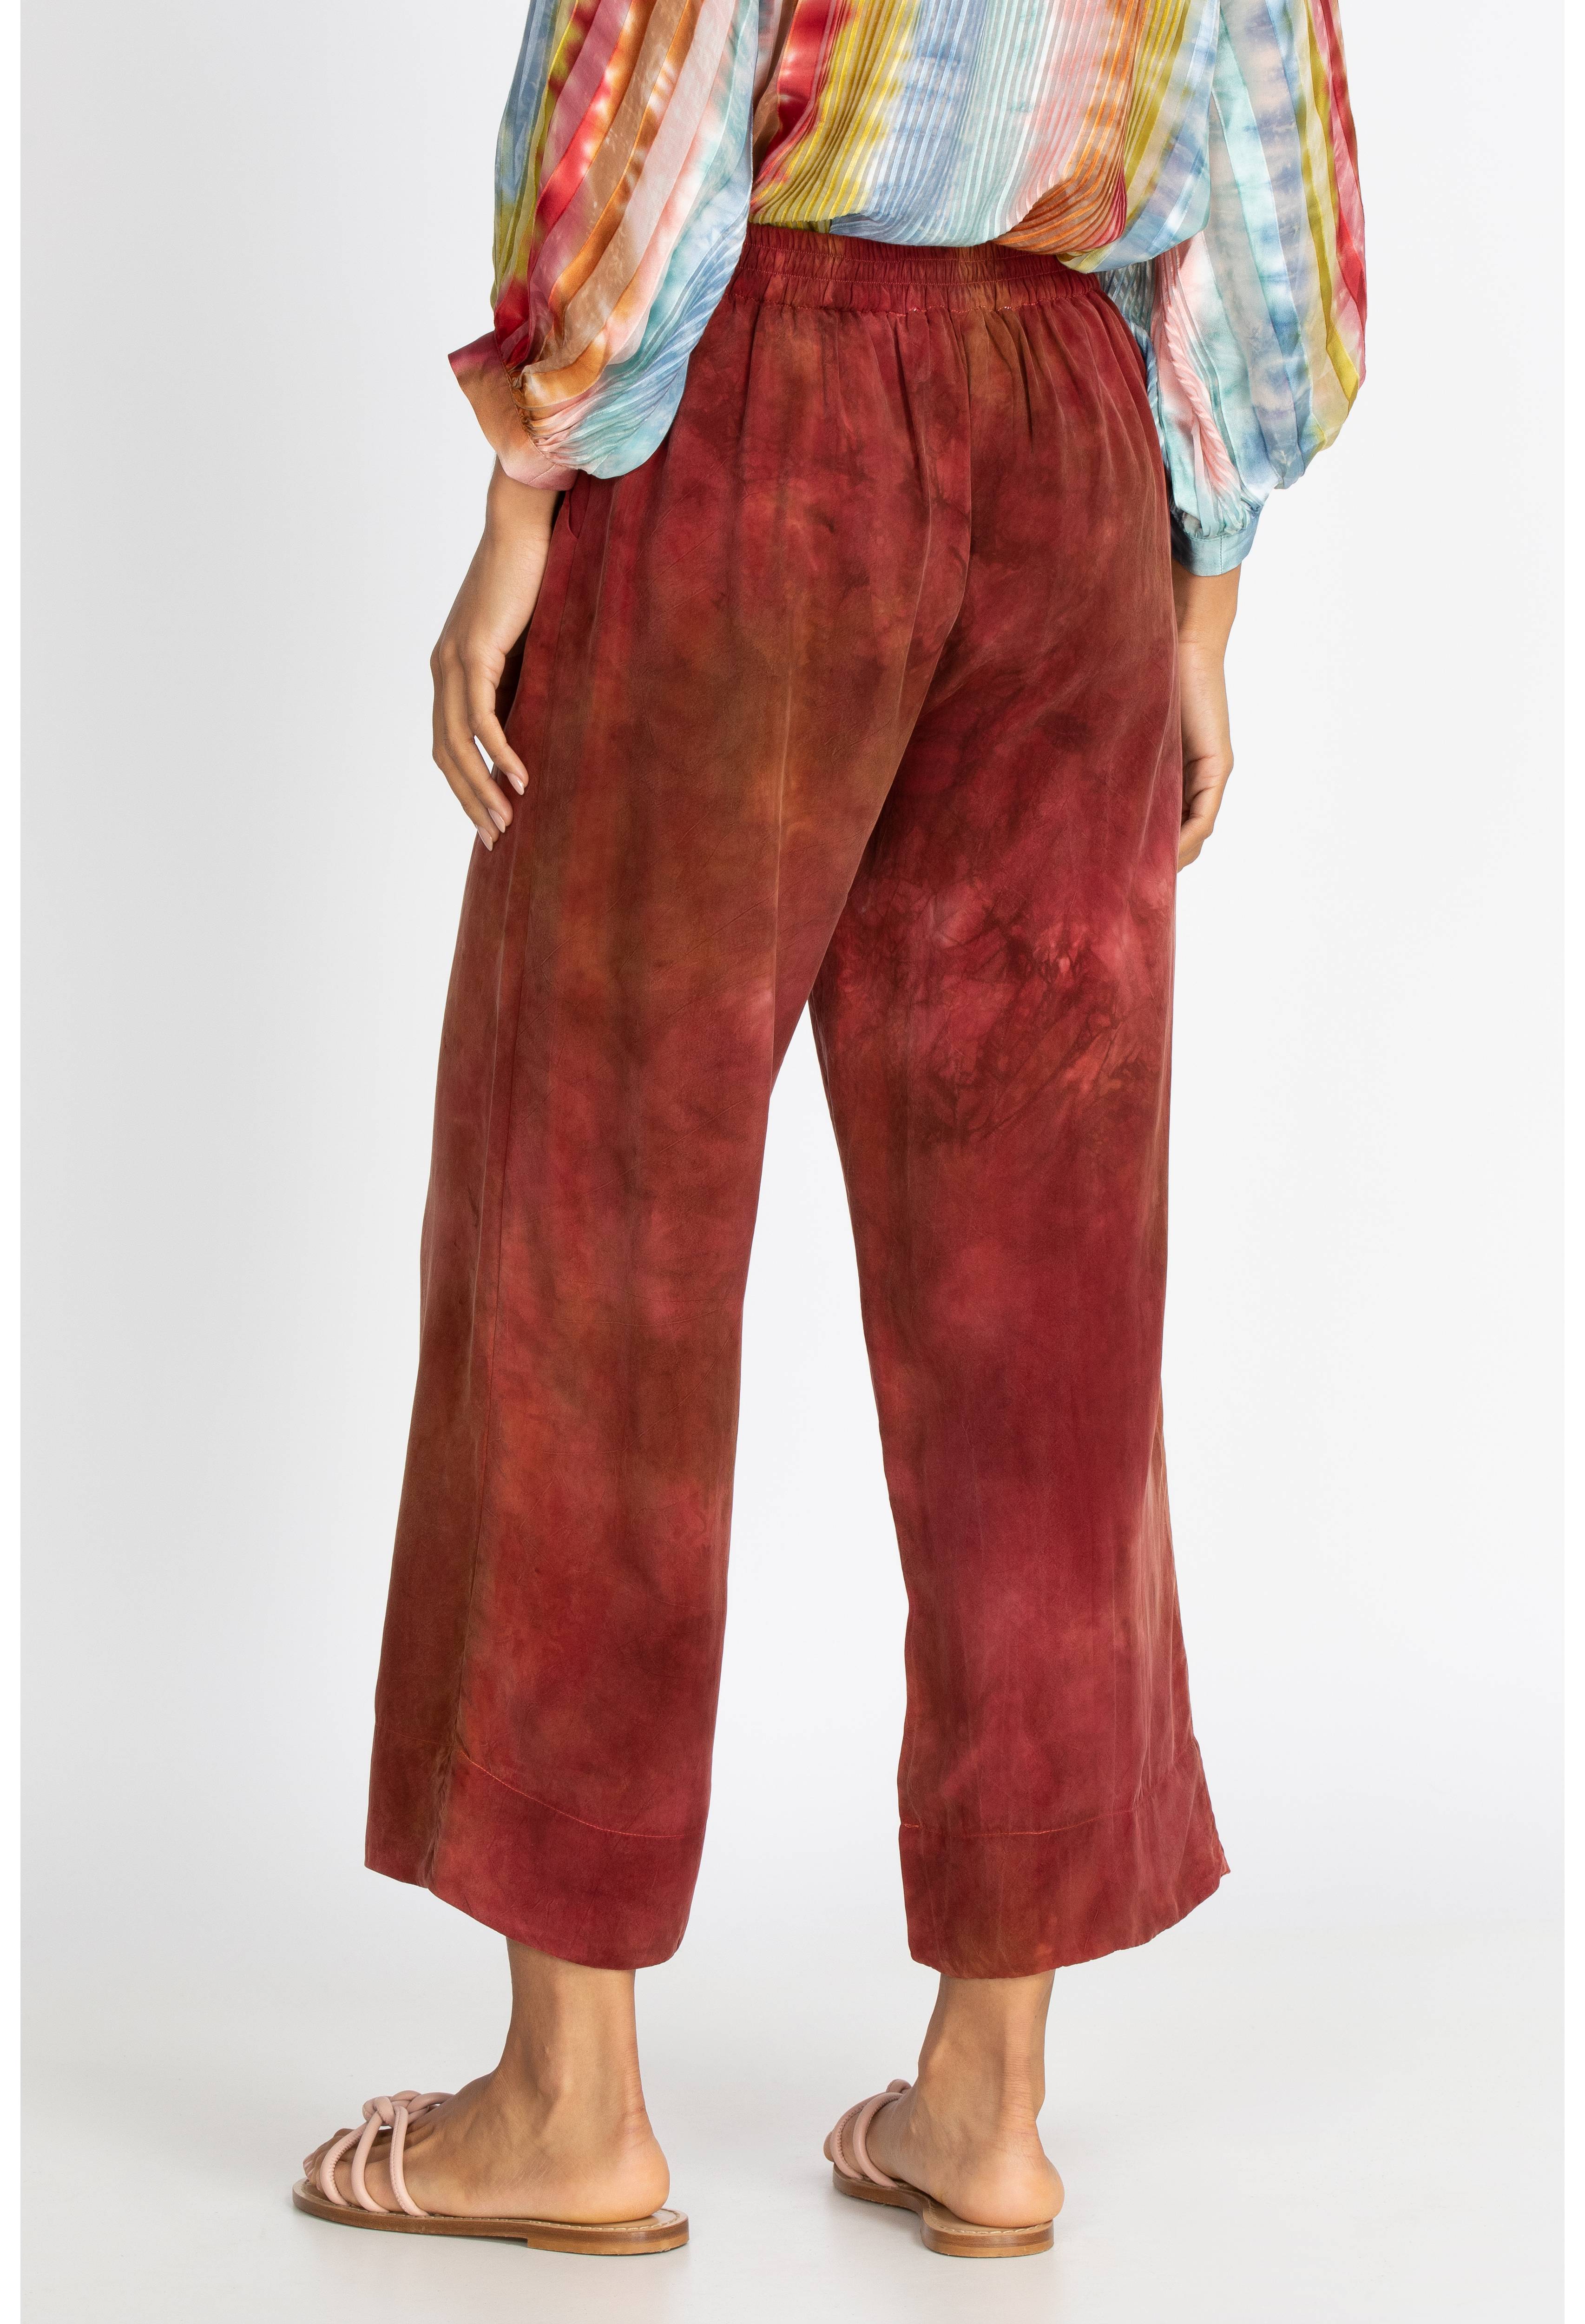 Amanda Bond Gillian Crop Pants, , large image number 3